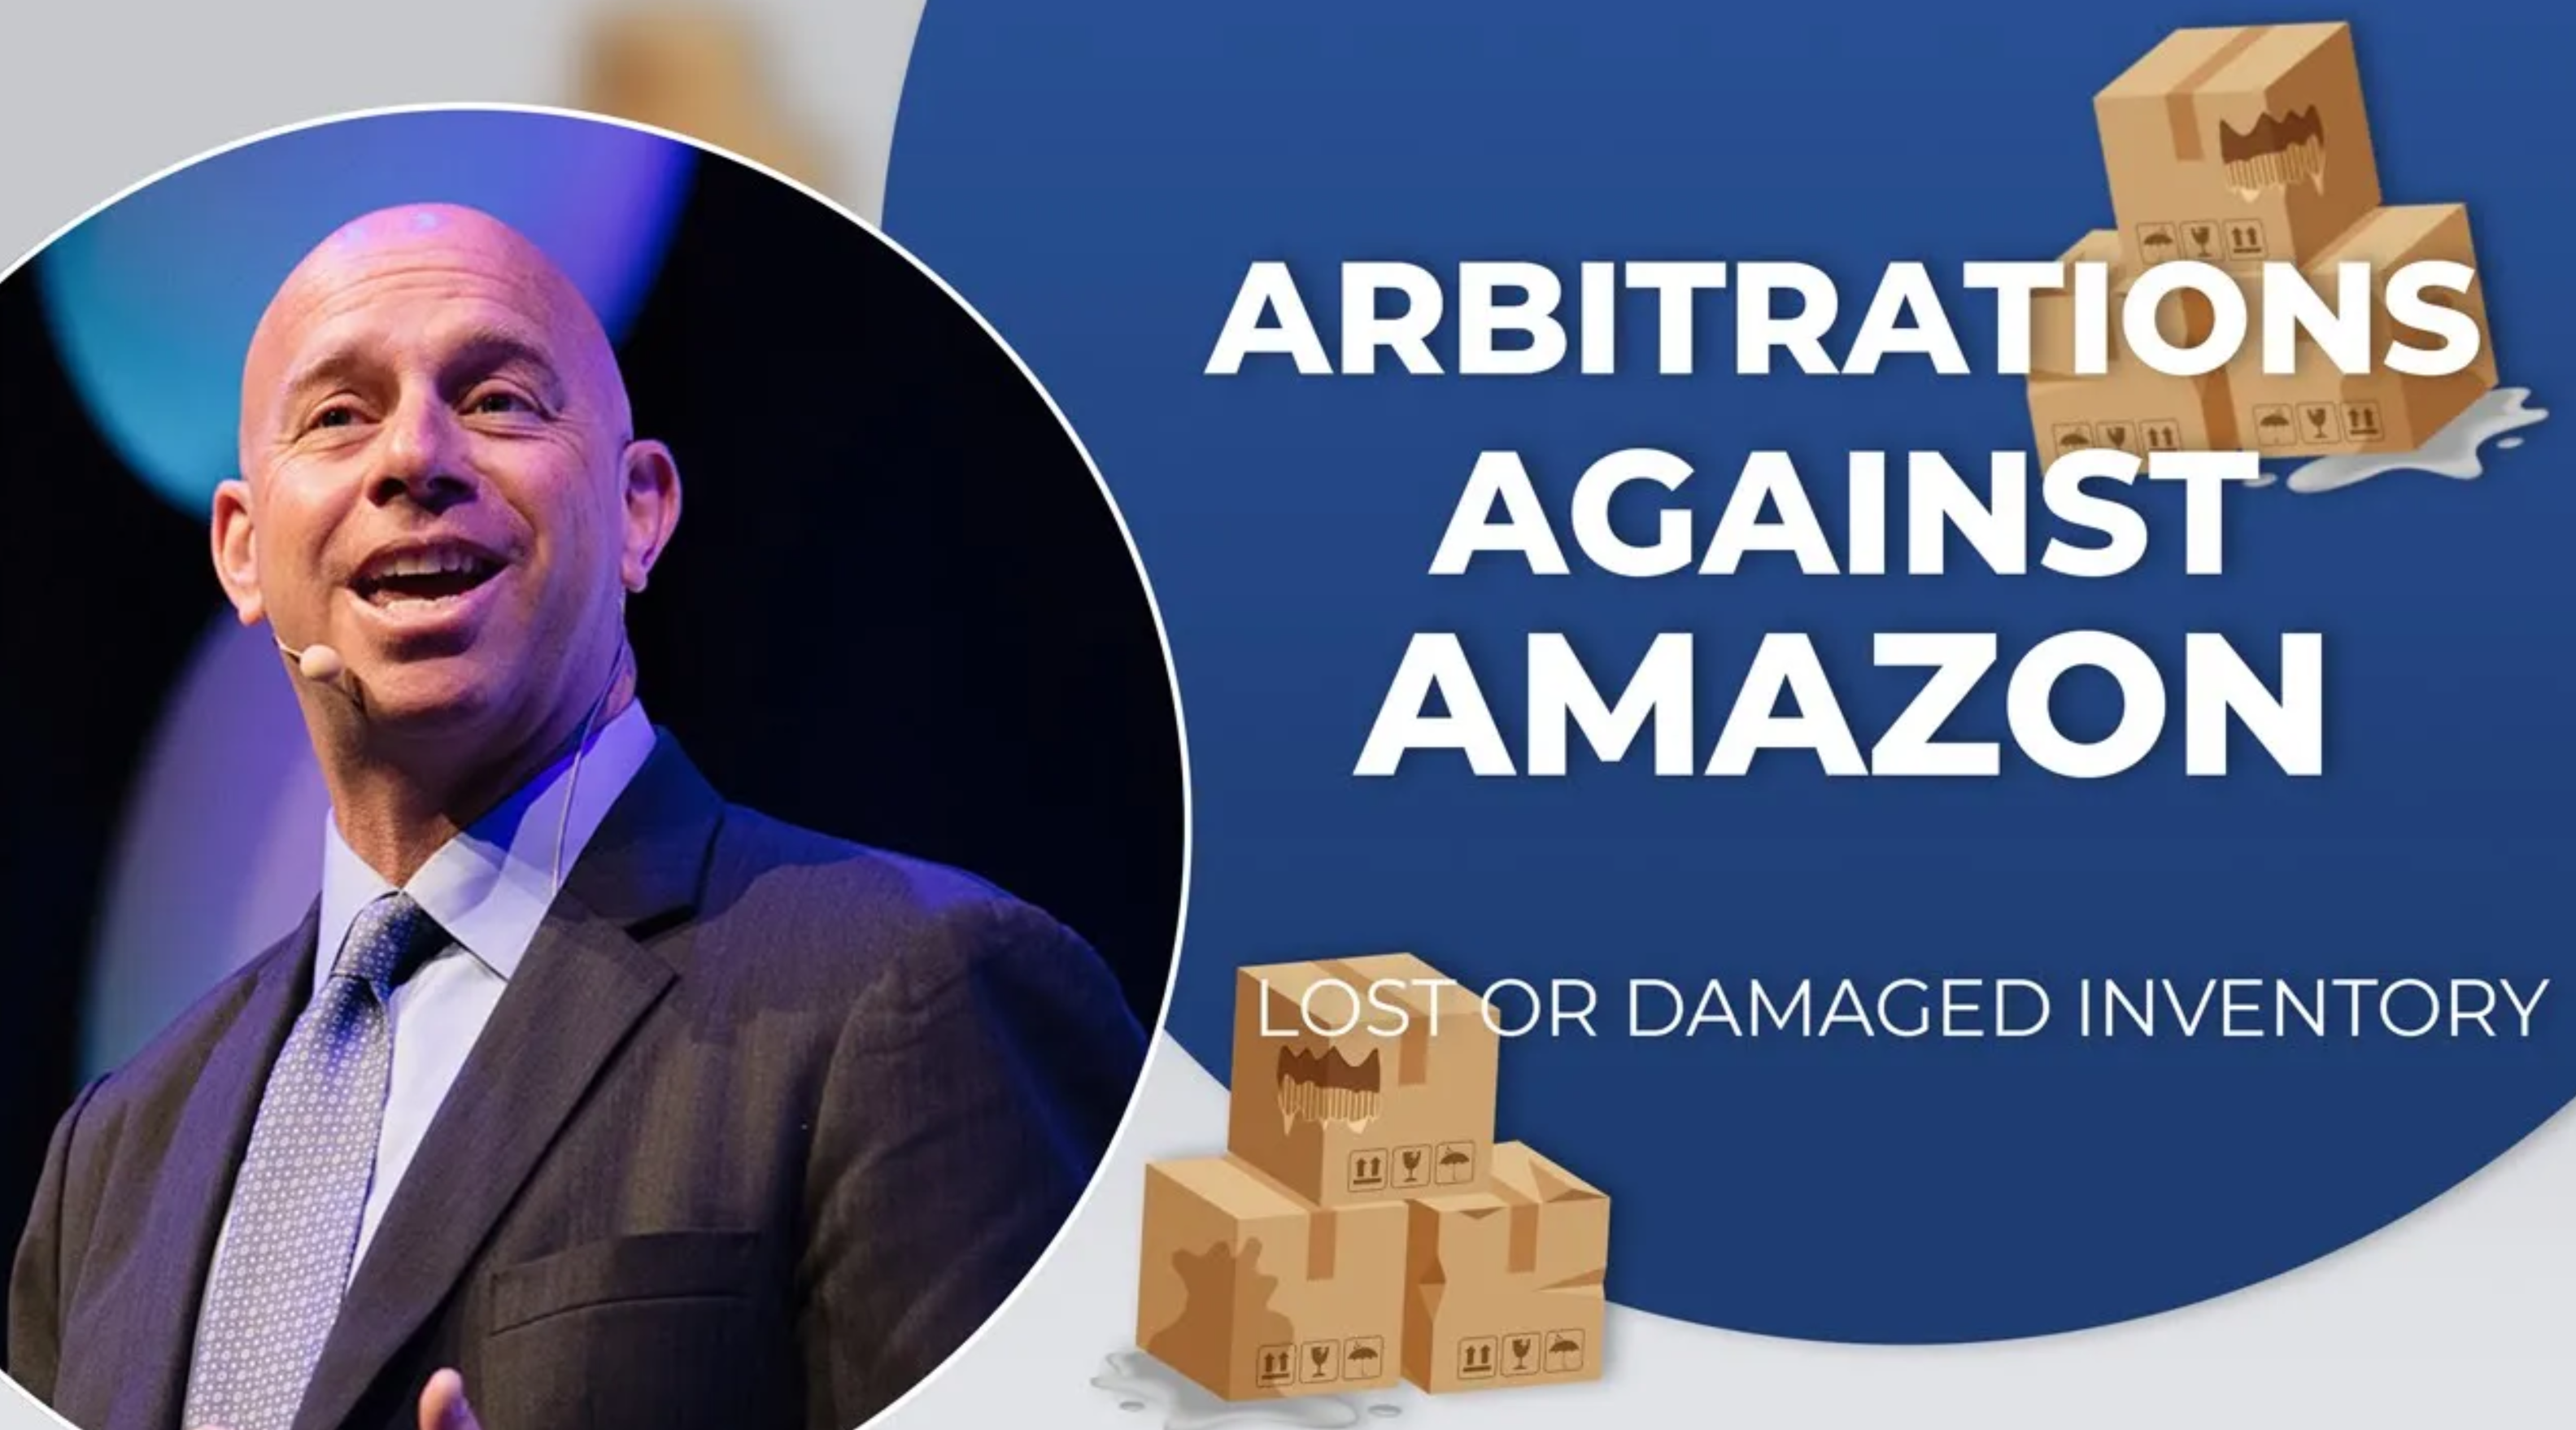 arbitration against Amazon